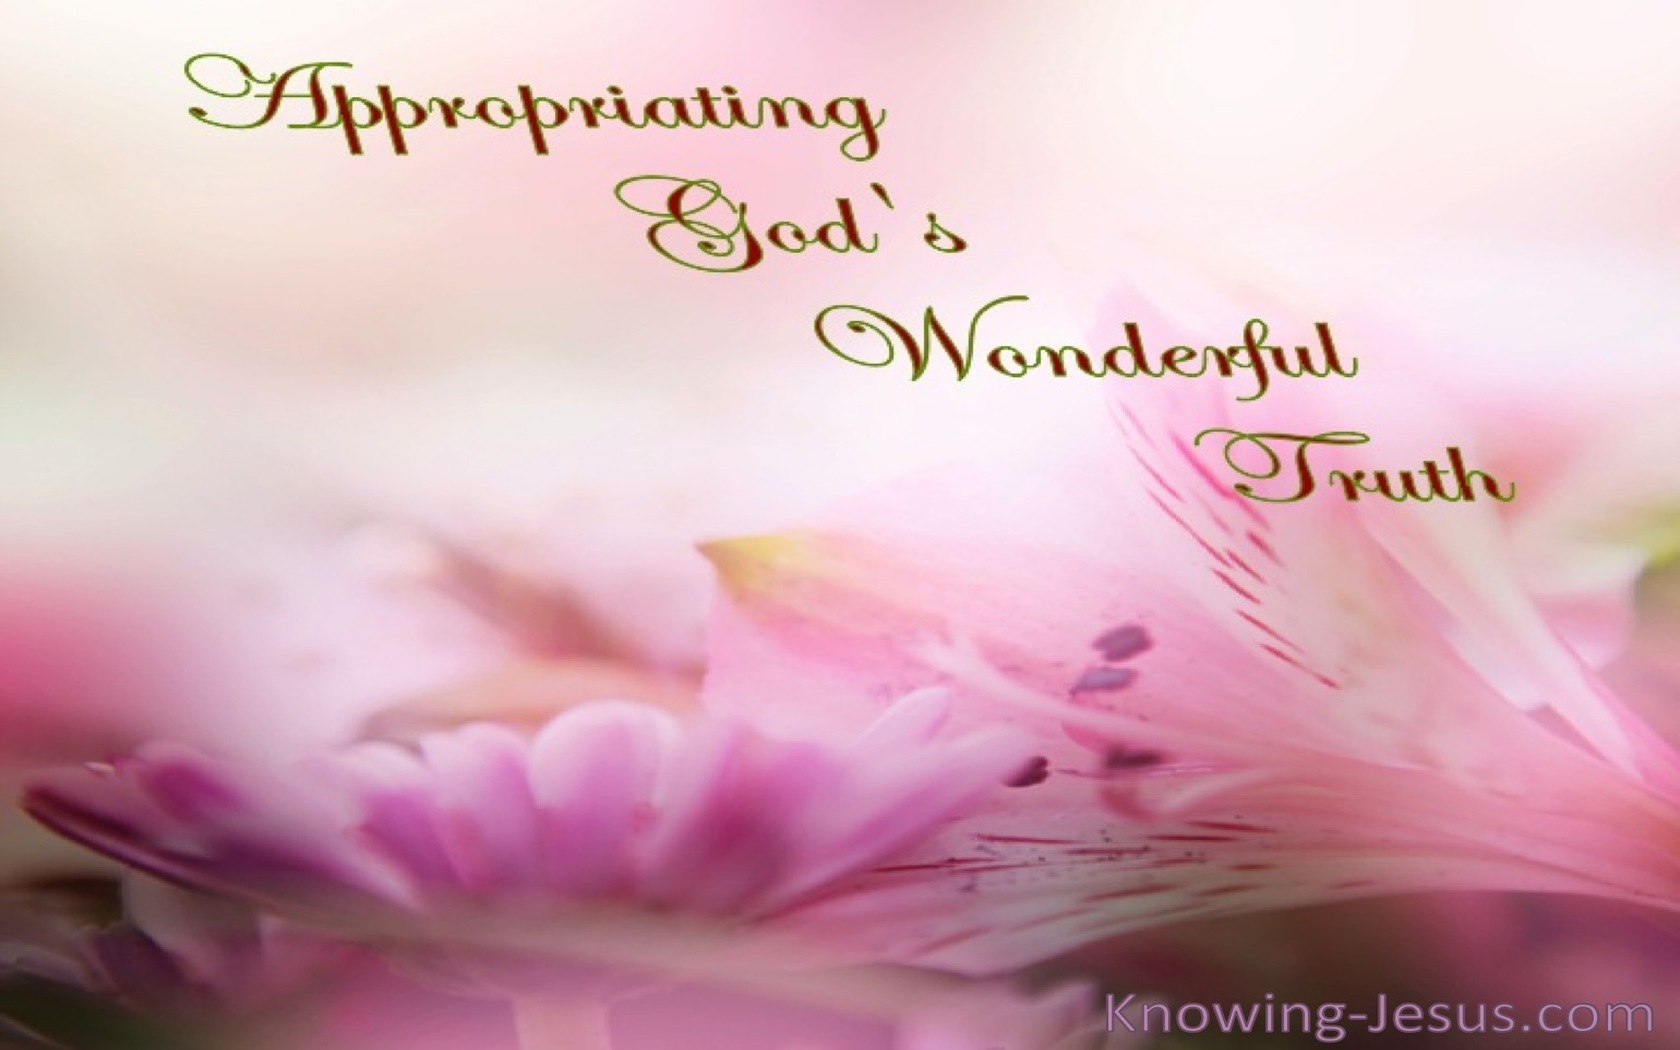 Appropriating God's Wonderful Truth (devotional) (brown)